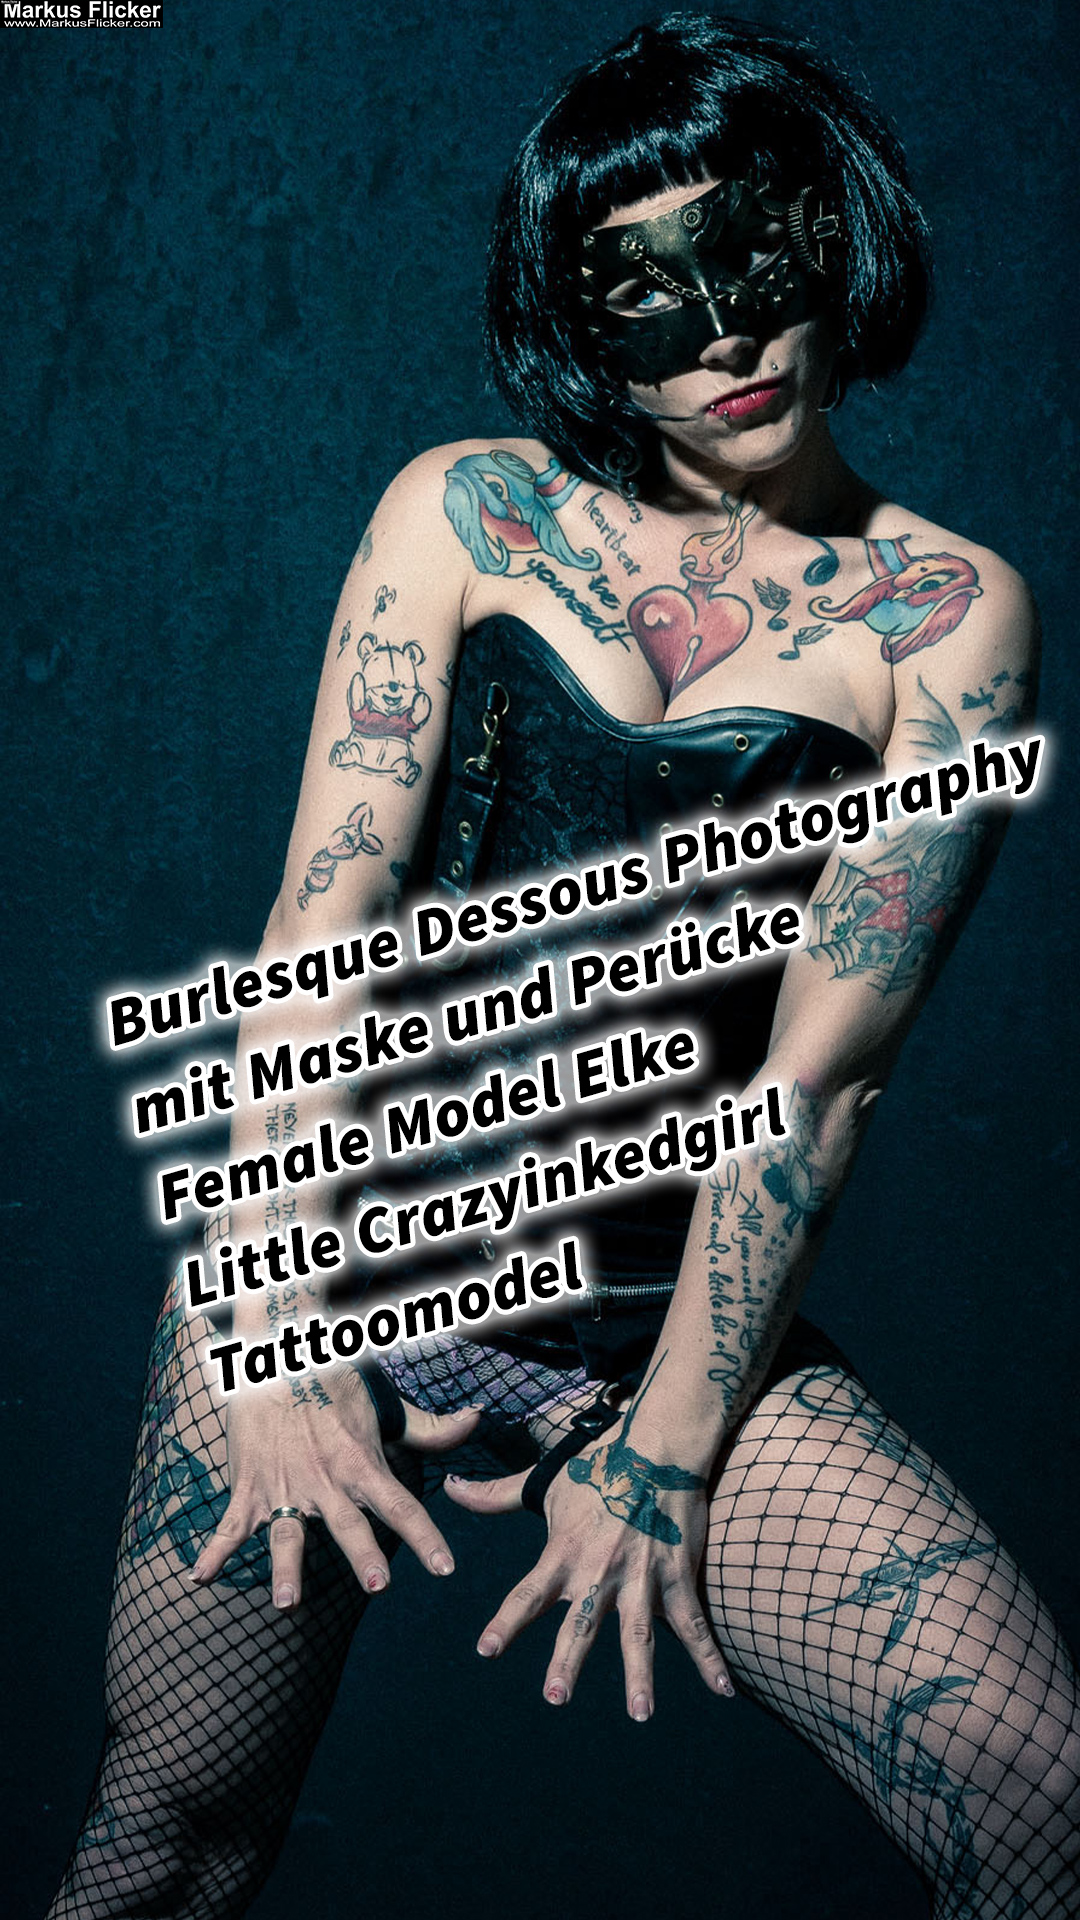 Burlesque Dessous Photography mit Maske und Perücke Female Model Elke Little Crazyinkedgirl Tattoomodel